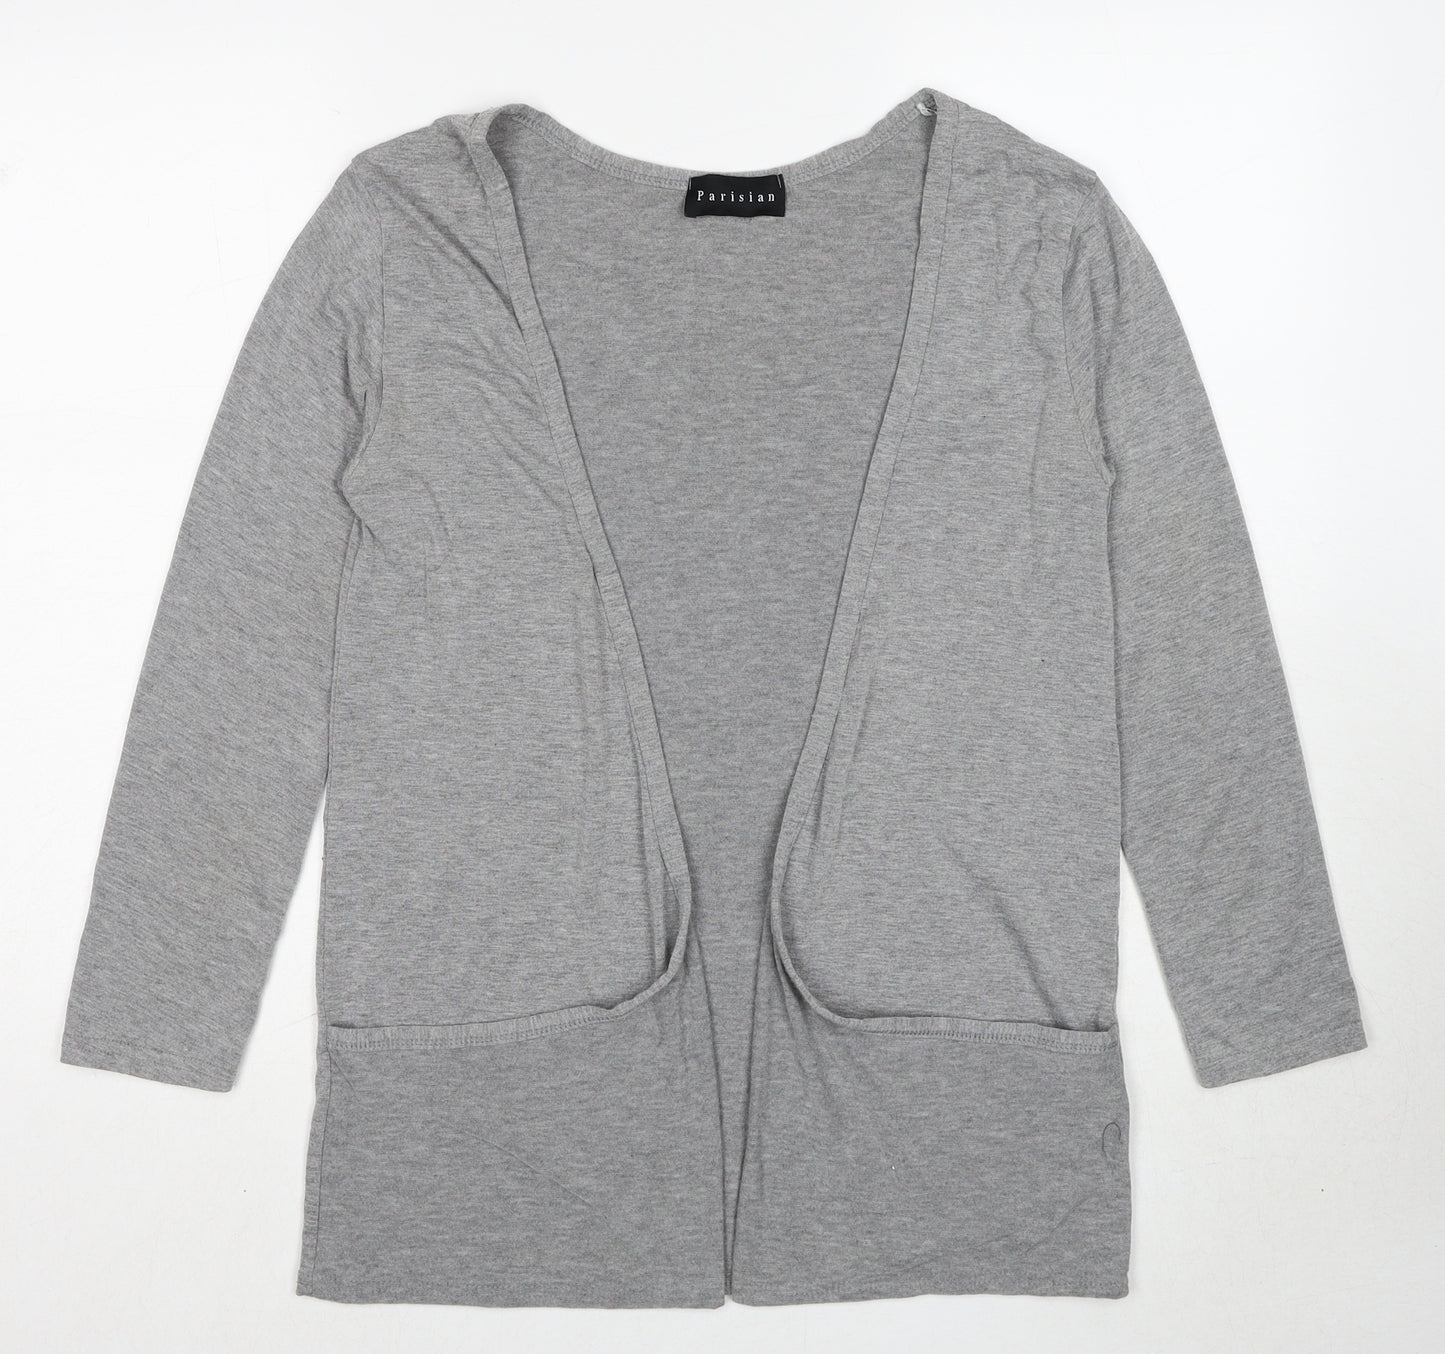 PARISIAN SIGNATURE Womens Grey V-Neck Viscose Cardigan Jumper Size S - Size S/M